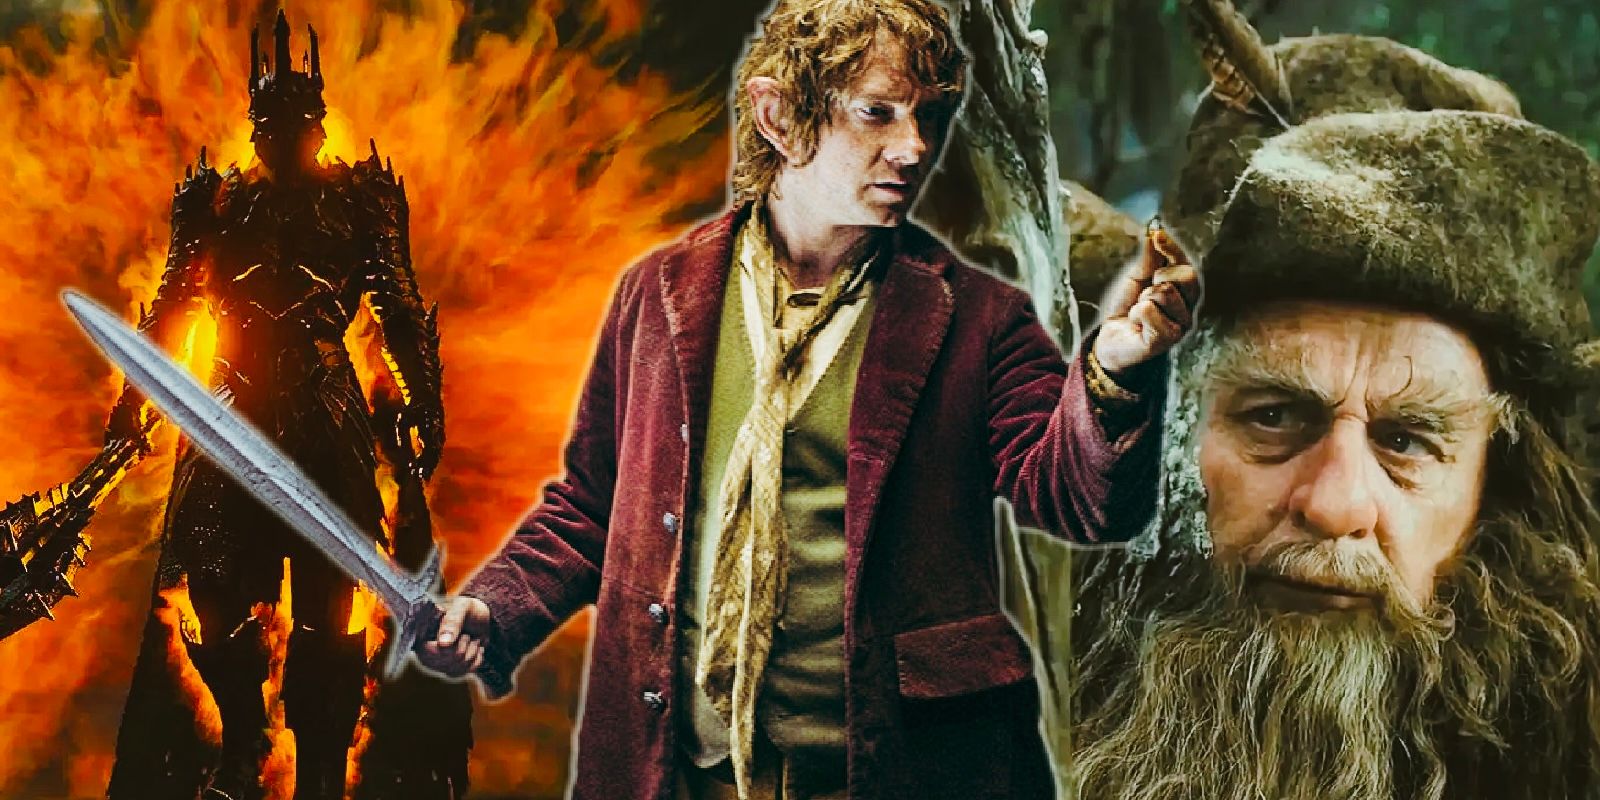 Sauron, Radagast and Bilbo Baggins in The Hobbit film trilogy